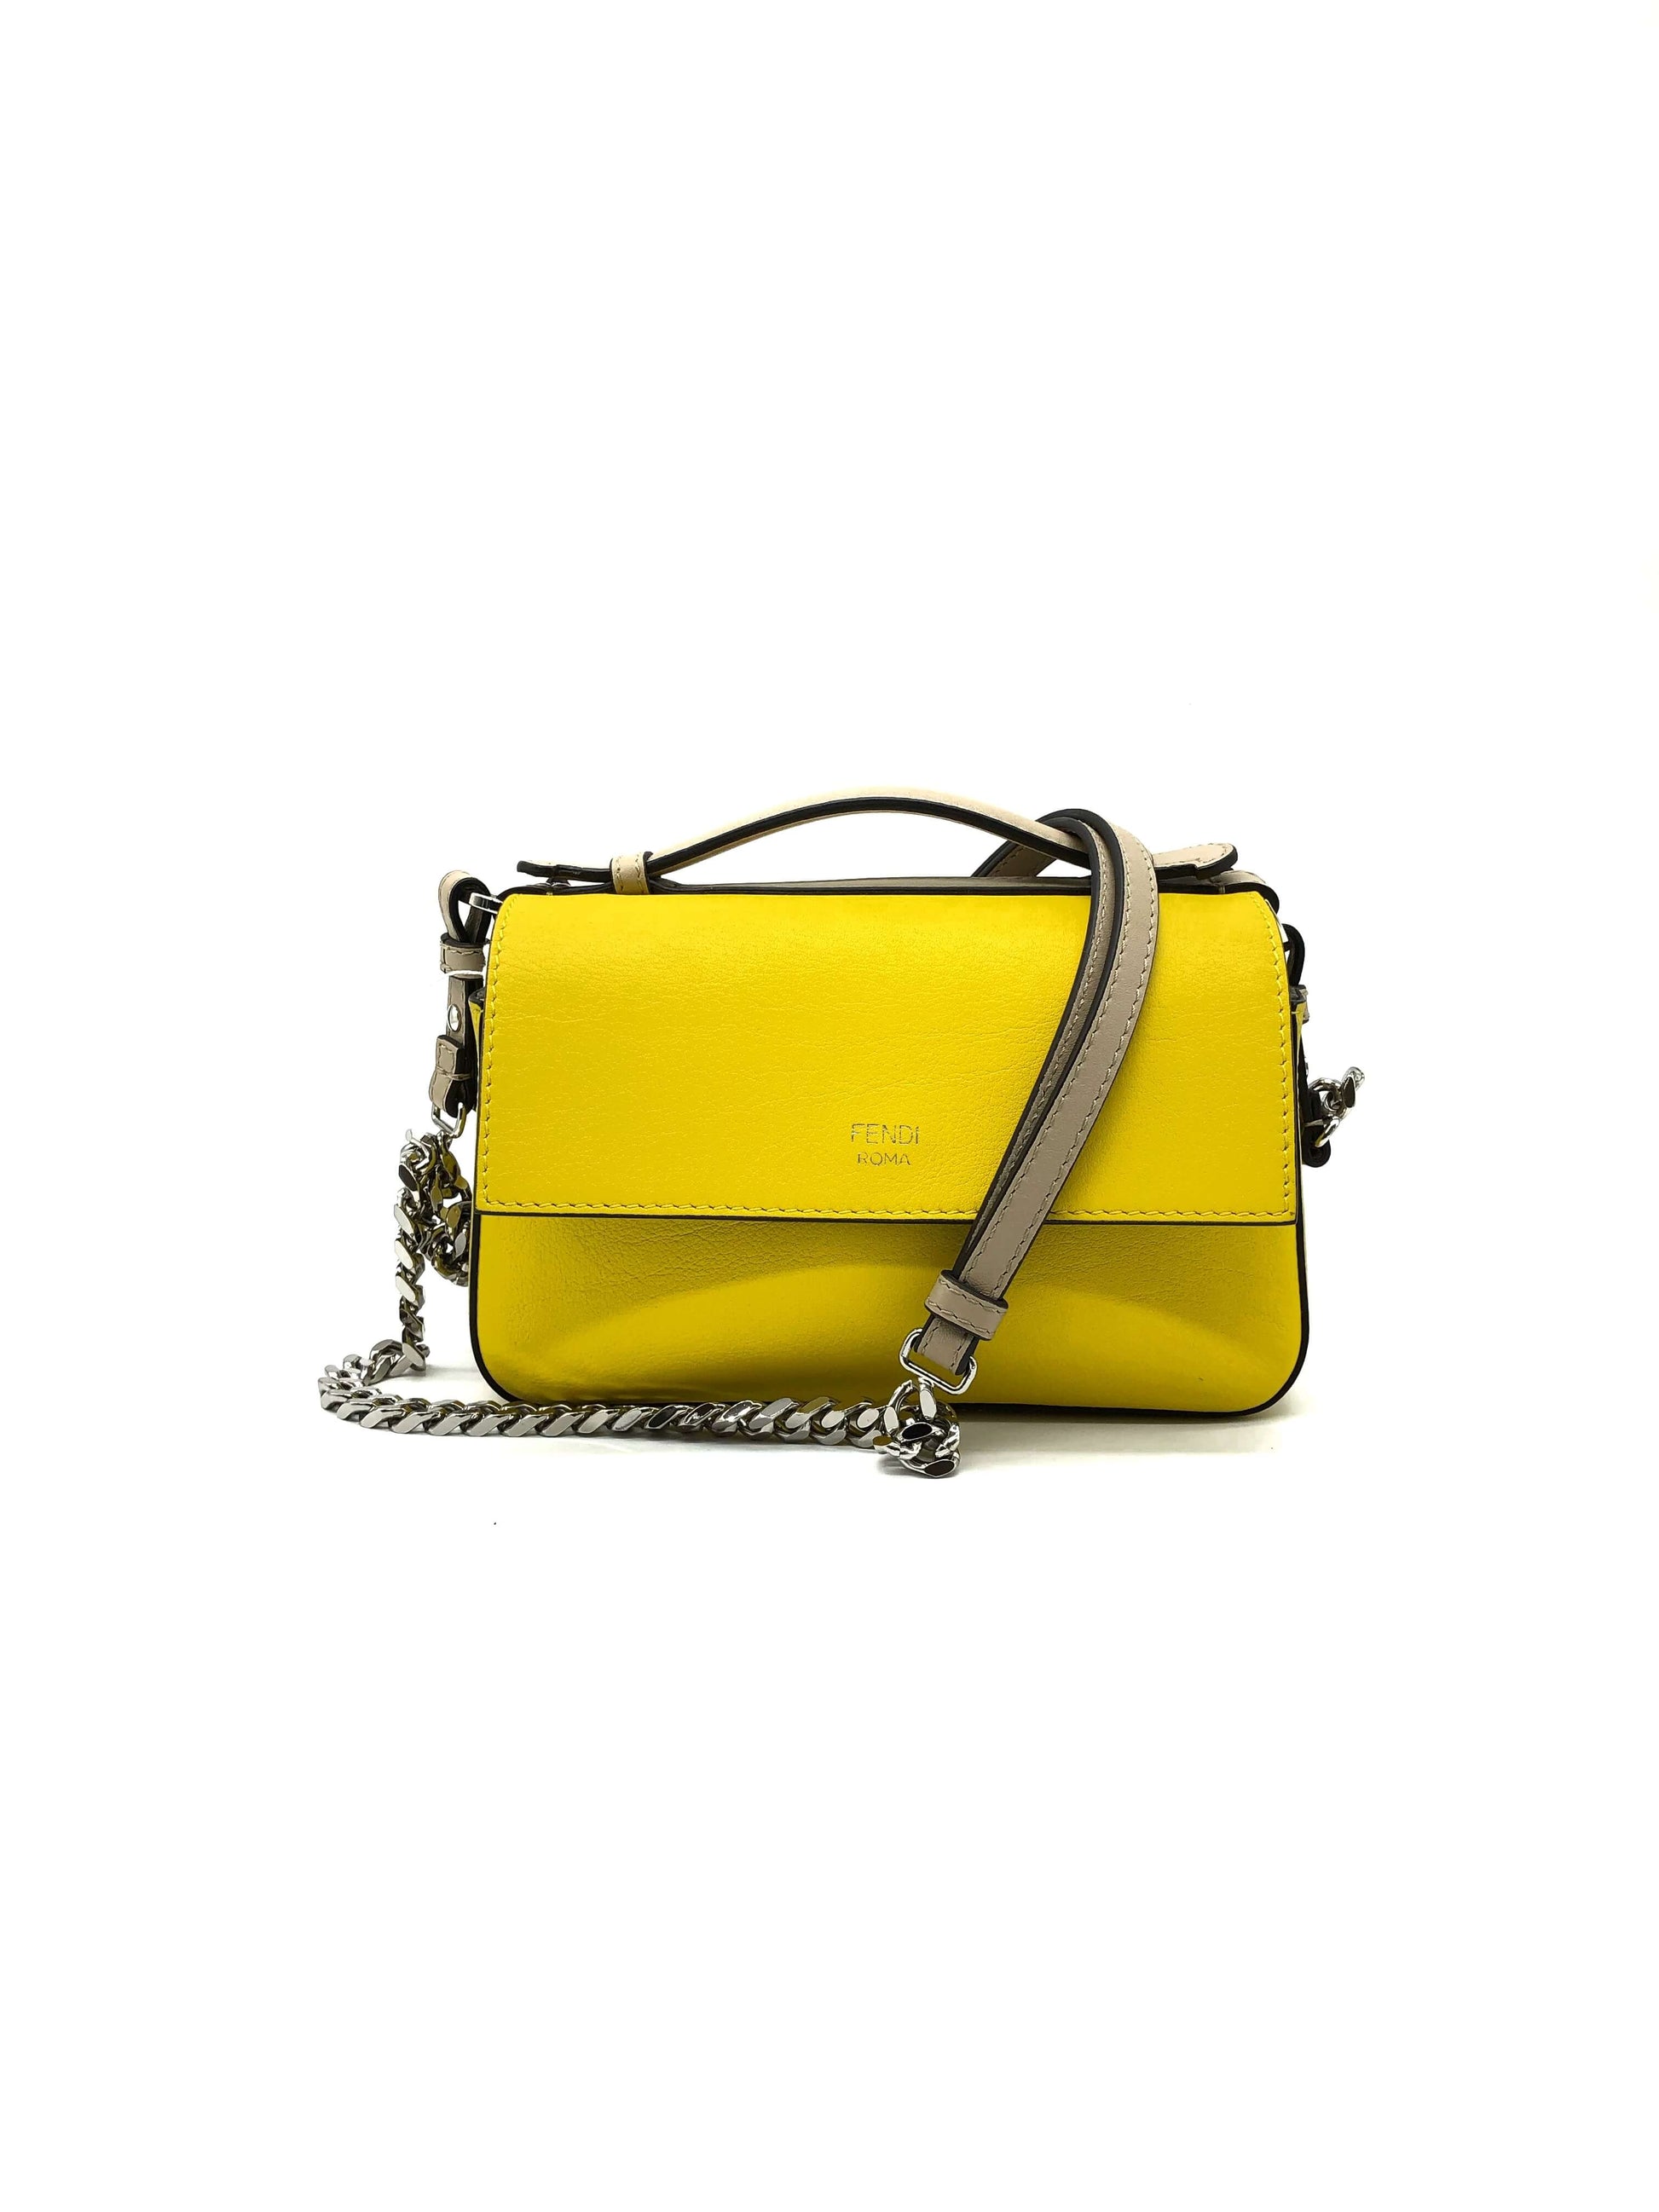 Fendi Beige/Yellow Double Micro Baguette Bag